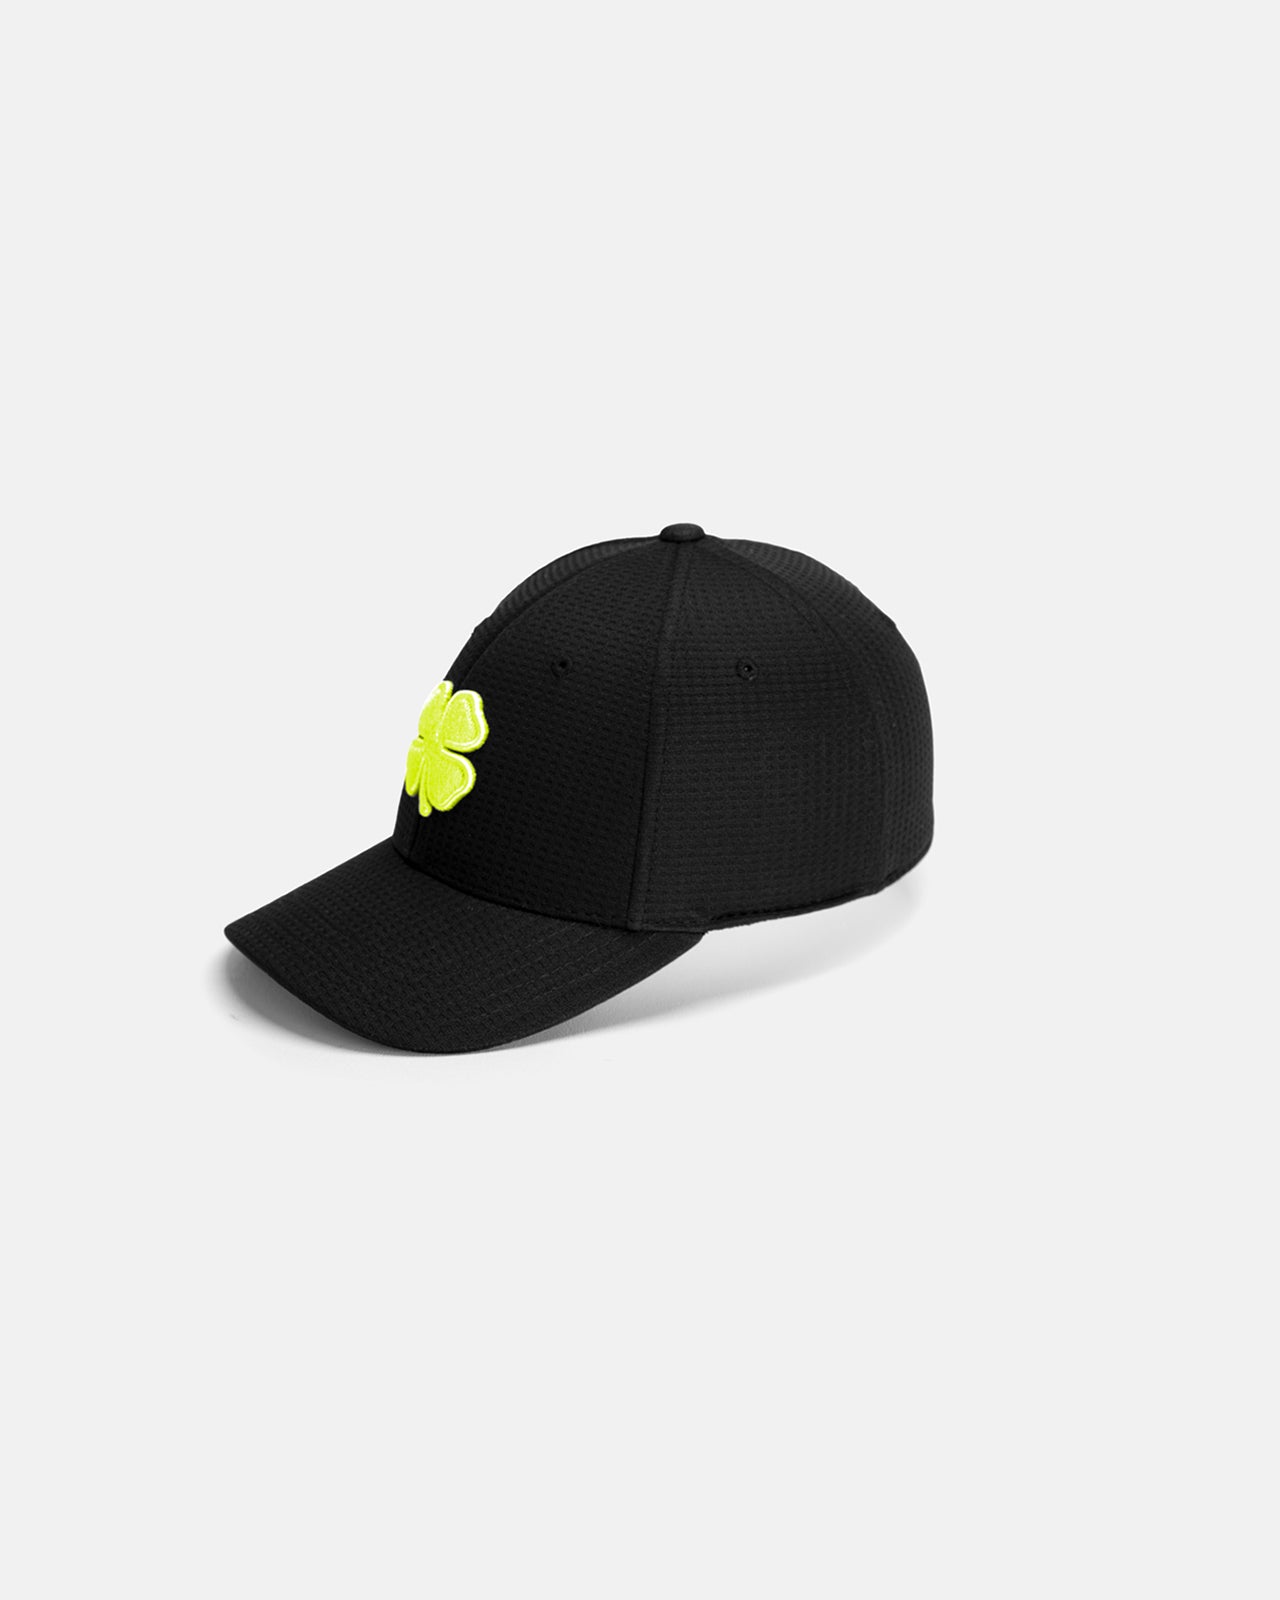 Accessories, University Of Louisville Hat Black Neon Green Size 7